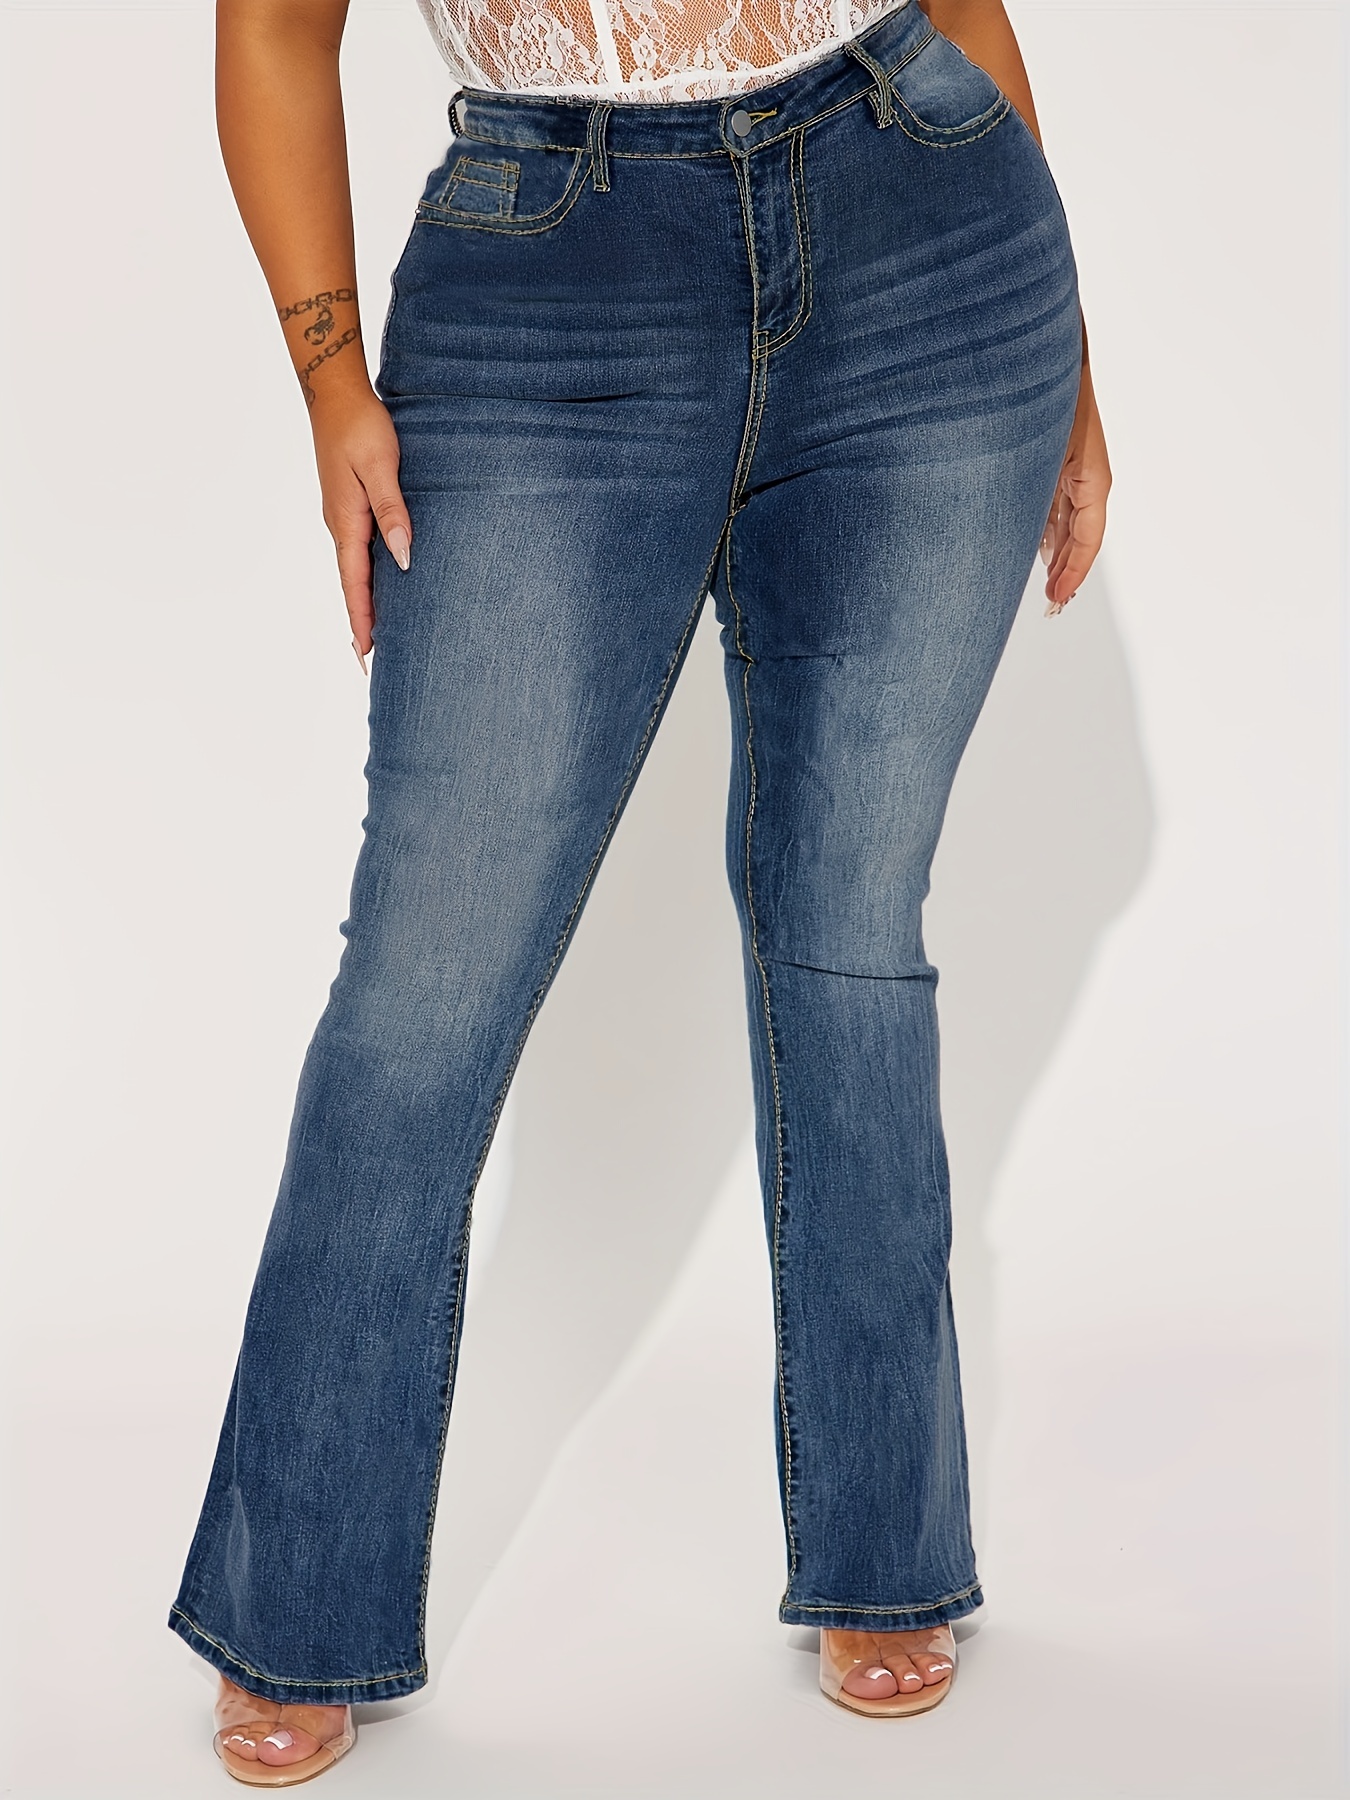 Womens Side Hollow Jeans Jeans Long Pants Wide Leg Flared Calças